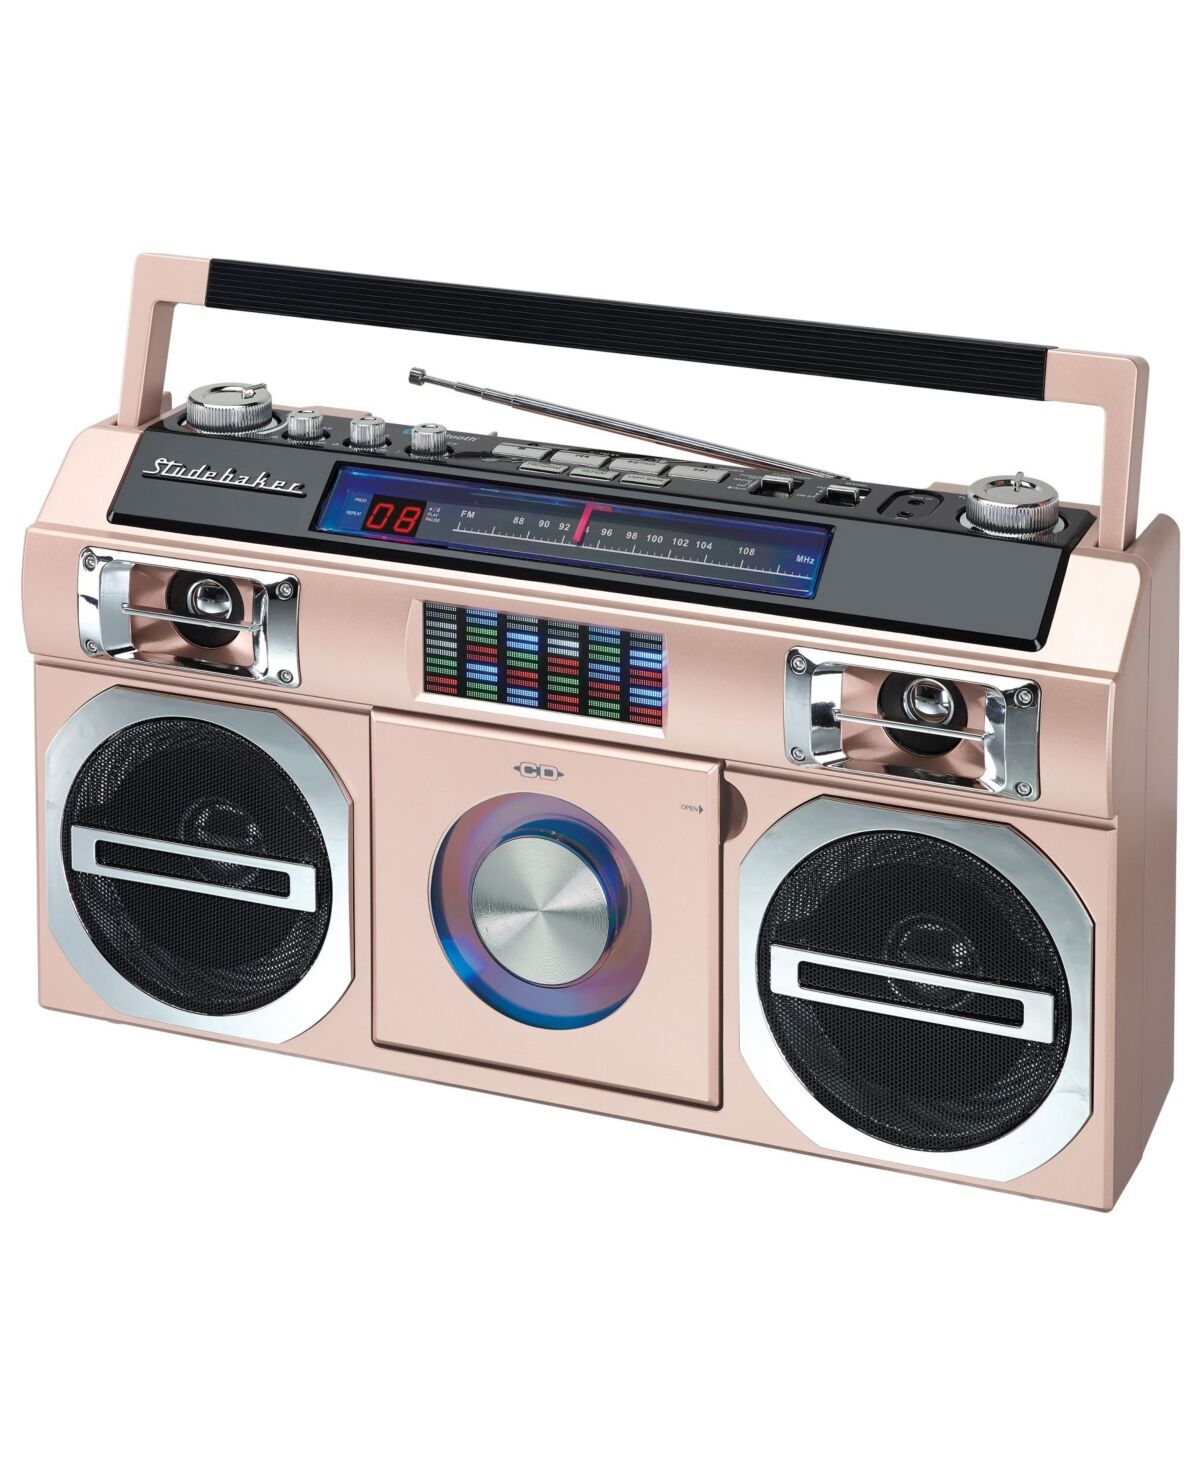 Studebaker SB2145RG 80's Retro Street Bluetooth Boombox with Fm Radio, Cd Player - Rose Gold